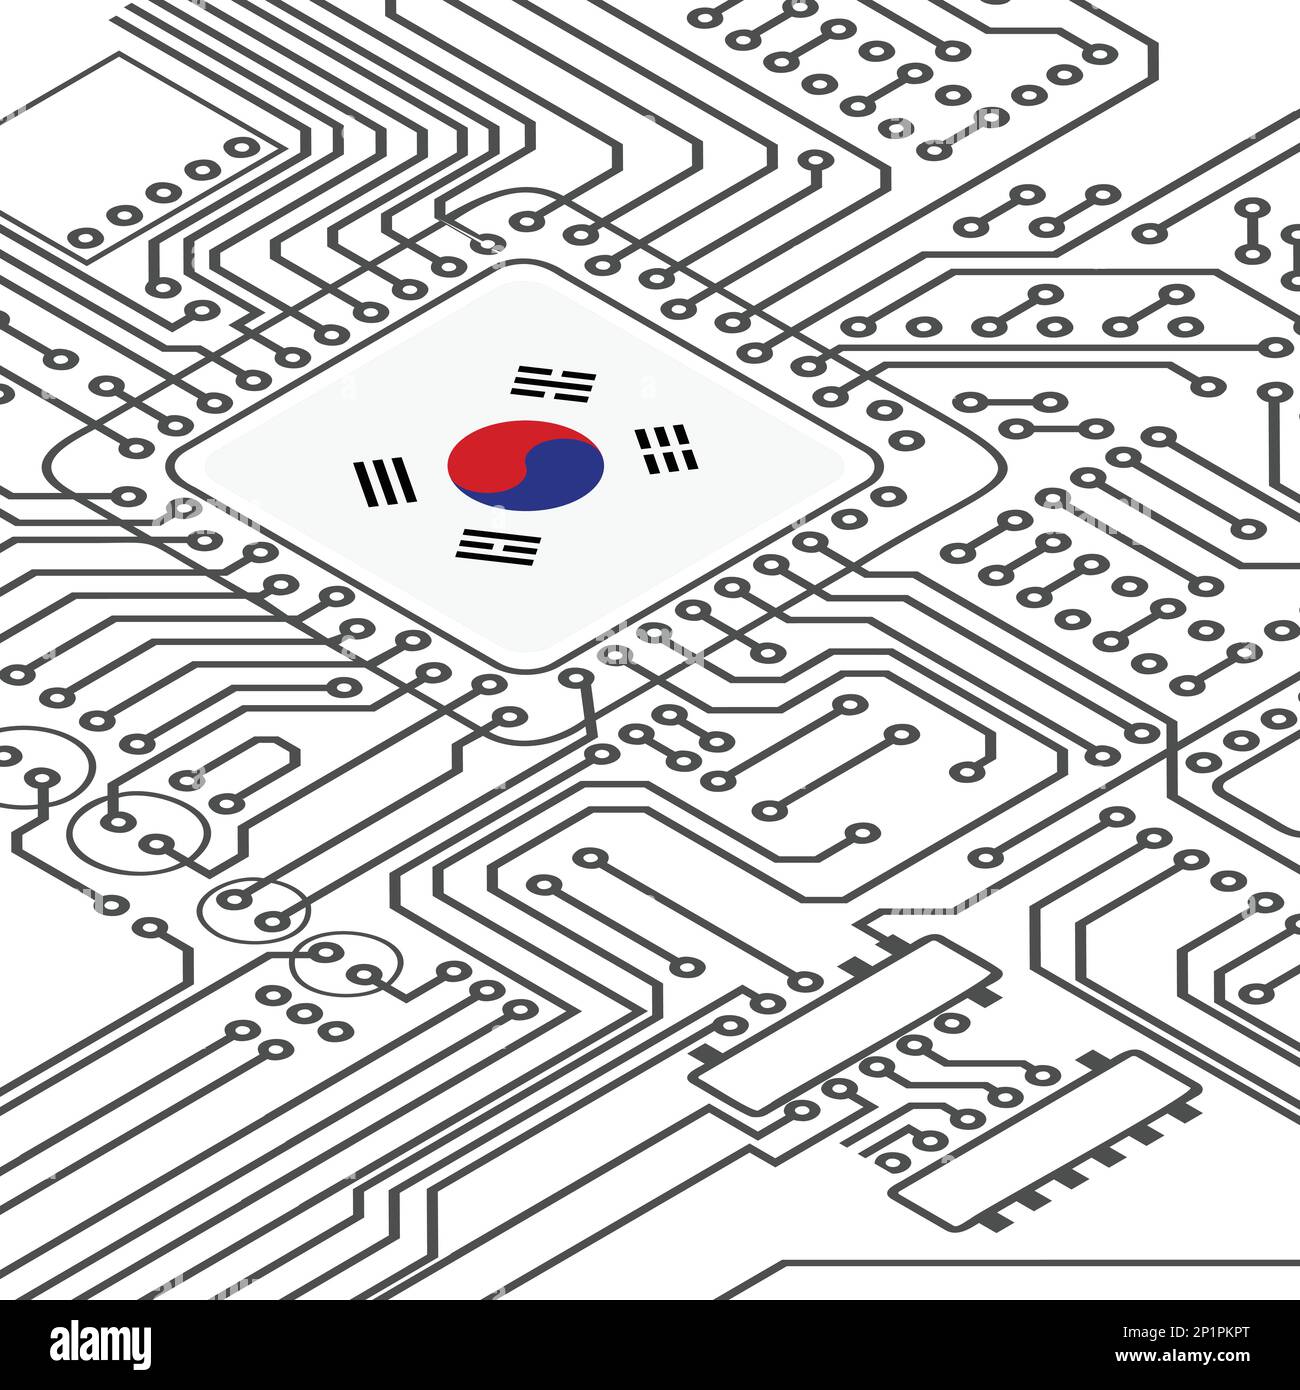 Electric circuit perspective South Korea microchip Stock Vector